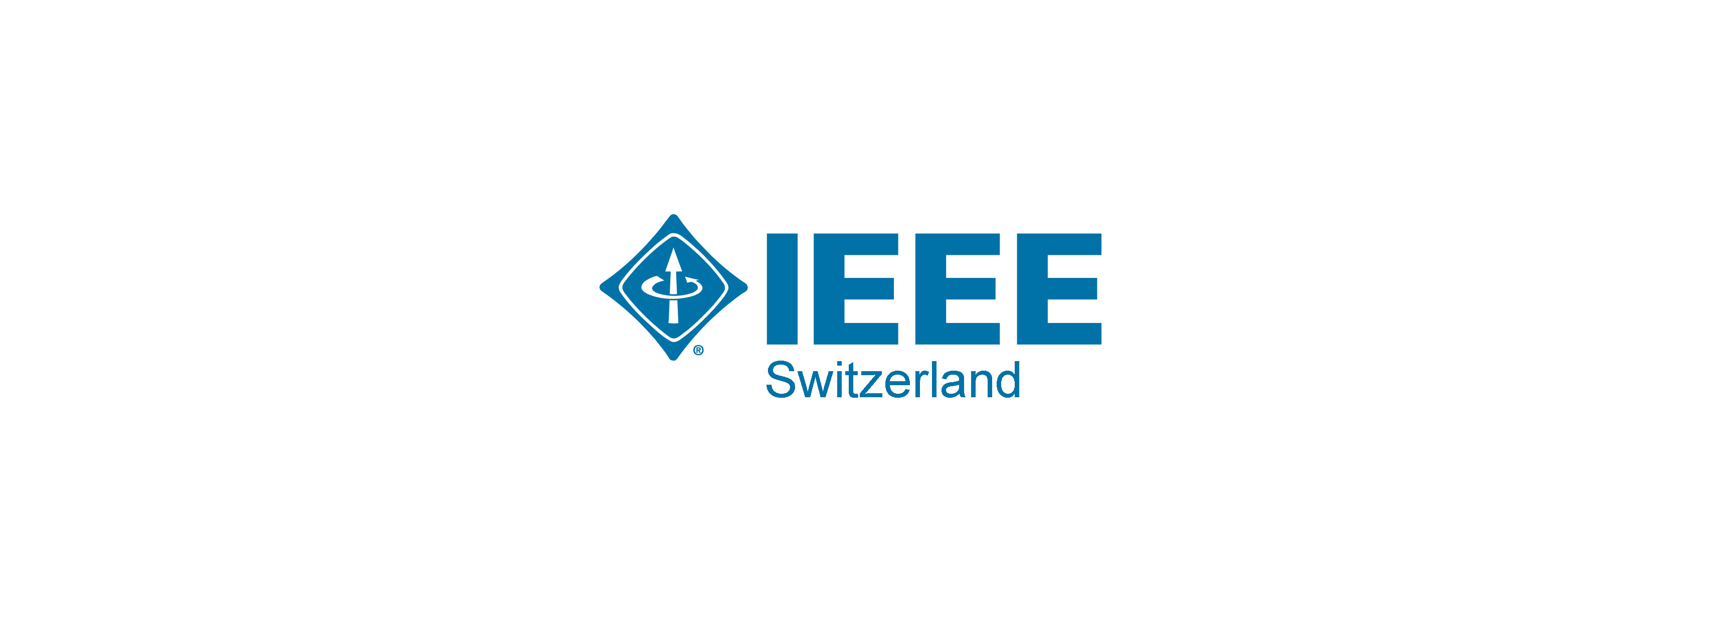 IEEE Logo - IEEE logo large - Wyss Center